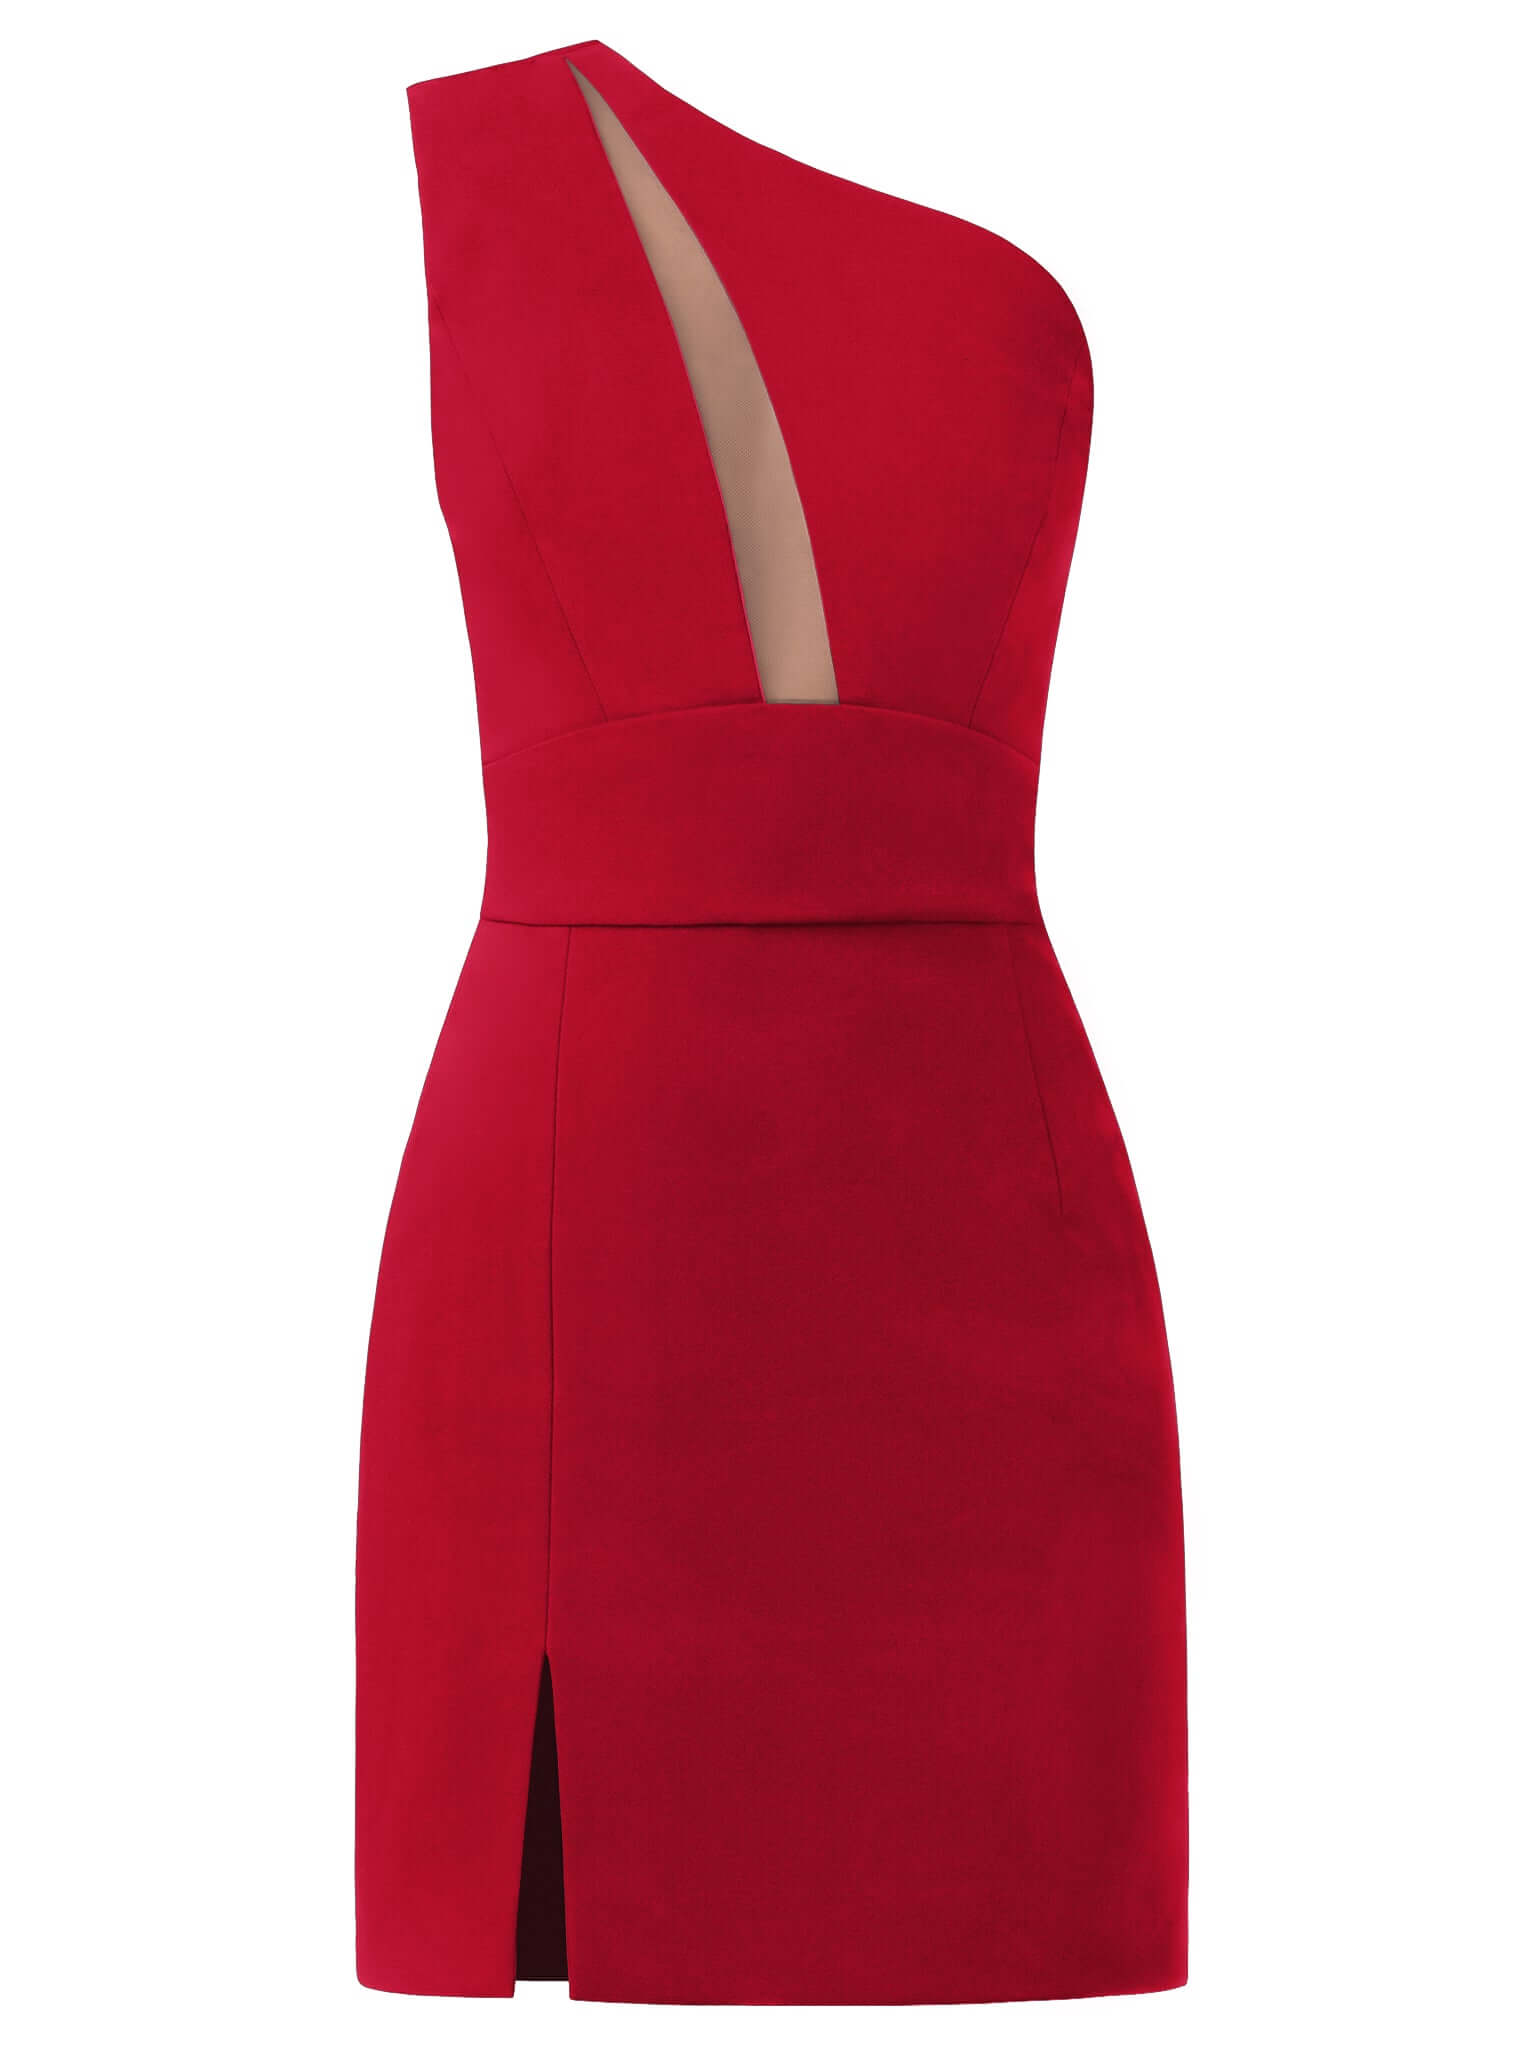 Love Weapon Mini Dress - Fierce Red by Tia Dorraine Women's Luxury Fashion Designer Clothing Brand